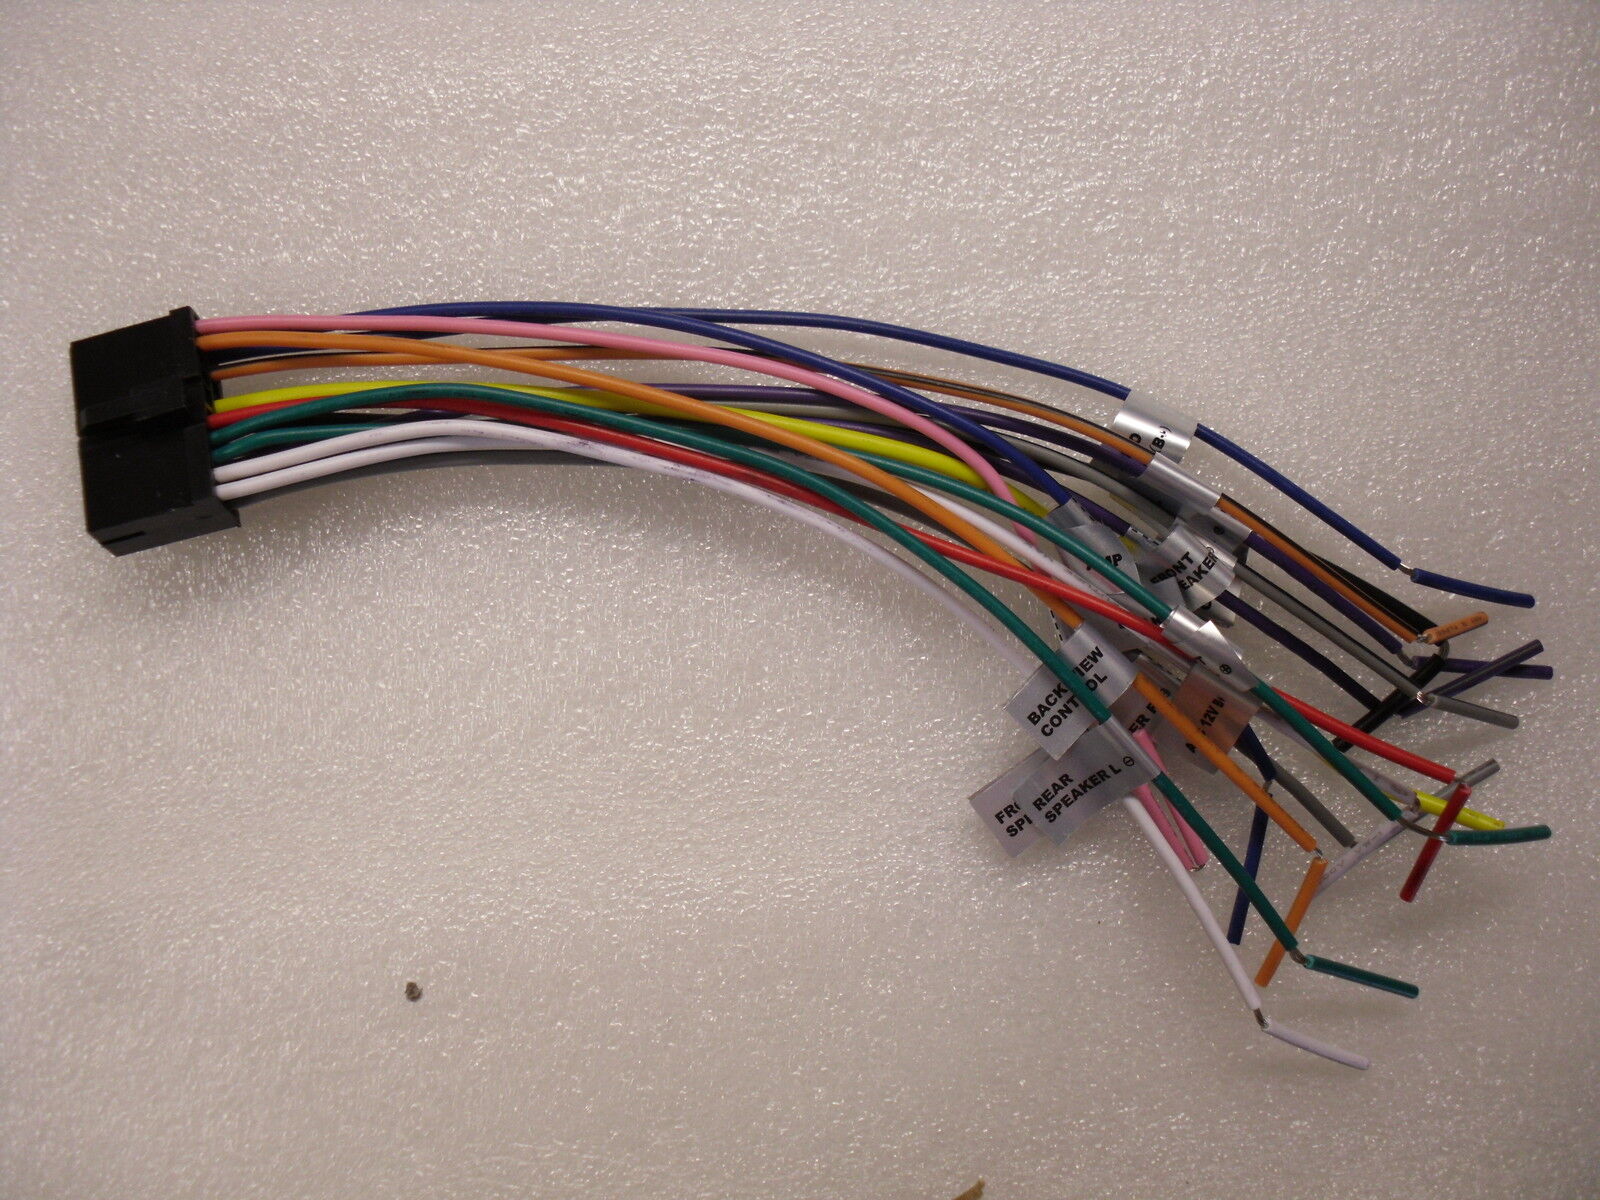 39 Dual Xdm280bt Wiring Harness Diagram - Wiring Diagram Online Source